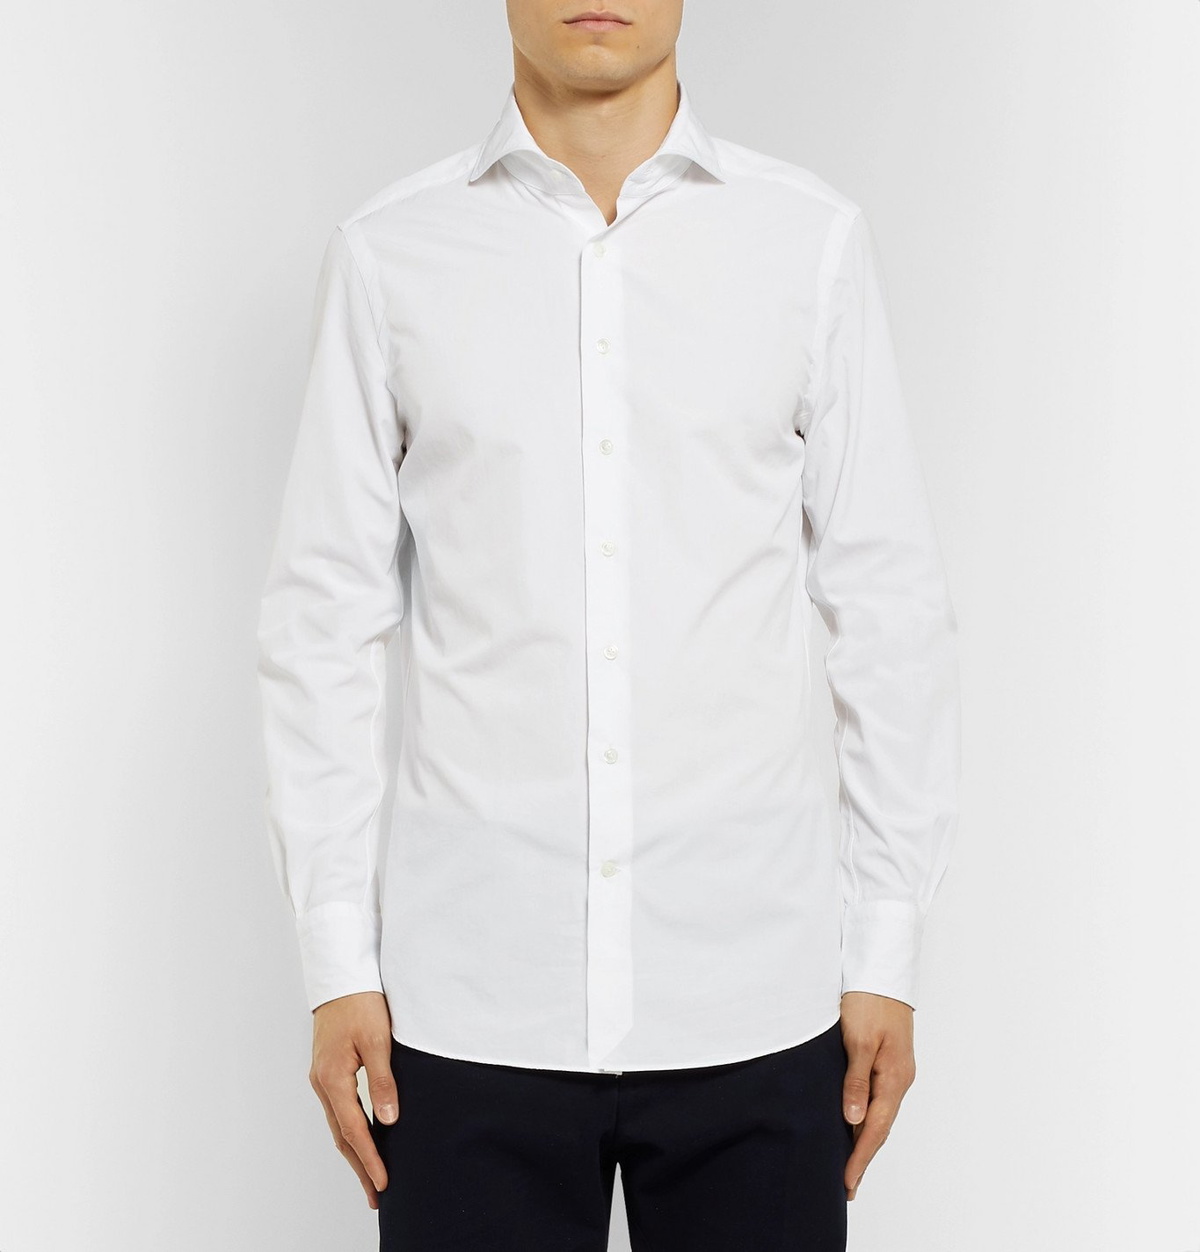 SALLE PRIVÉE - White Evron Slim-Fit Cutaway-Collar Cotton-Poplin Shirt ...